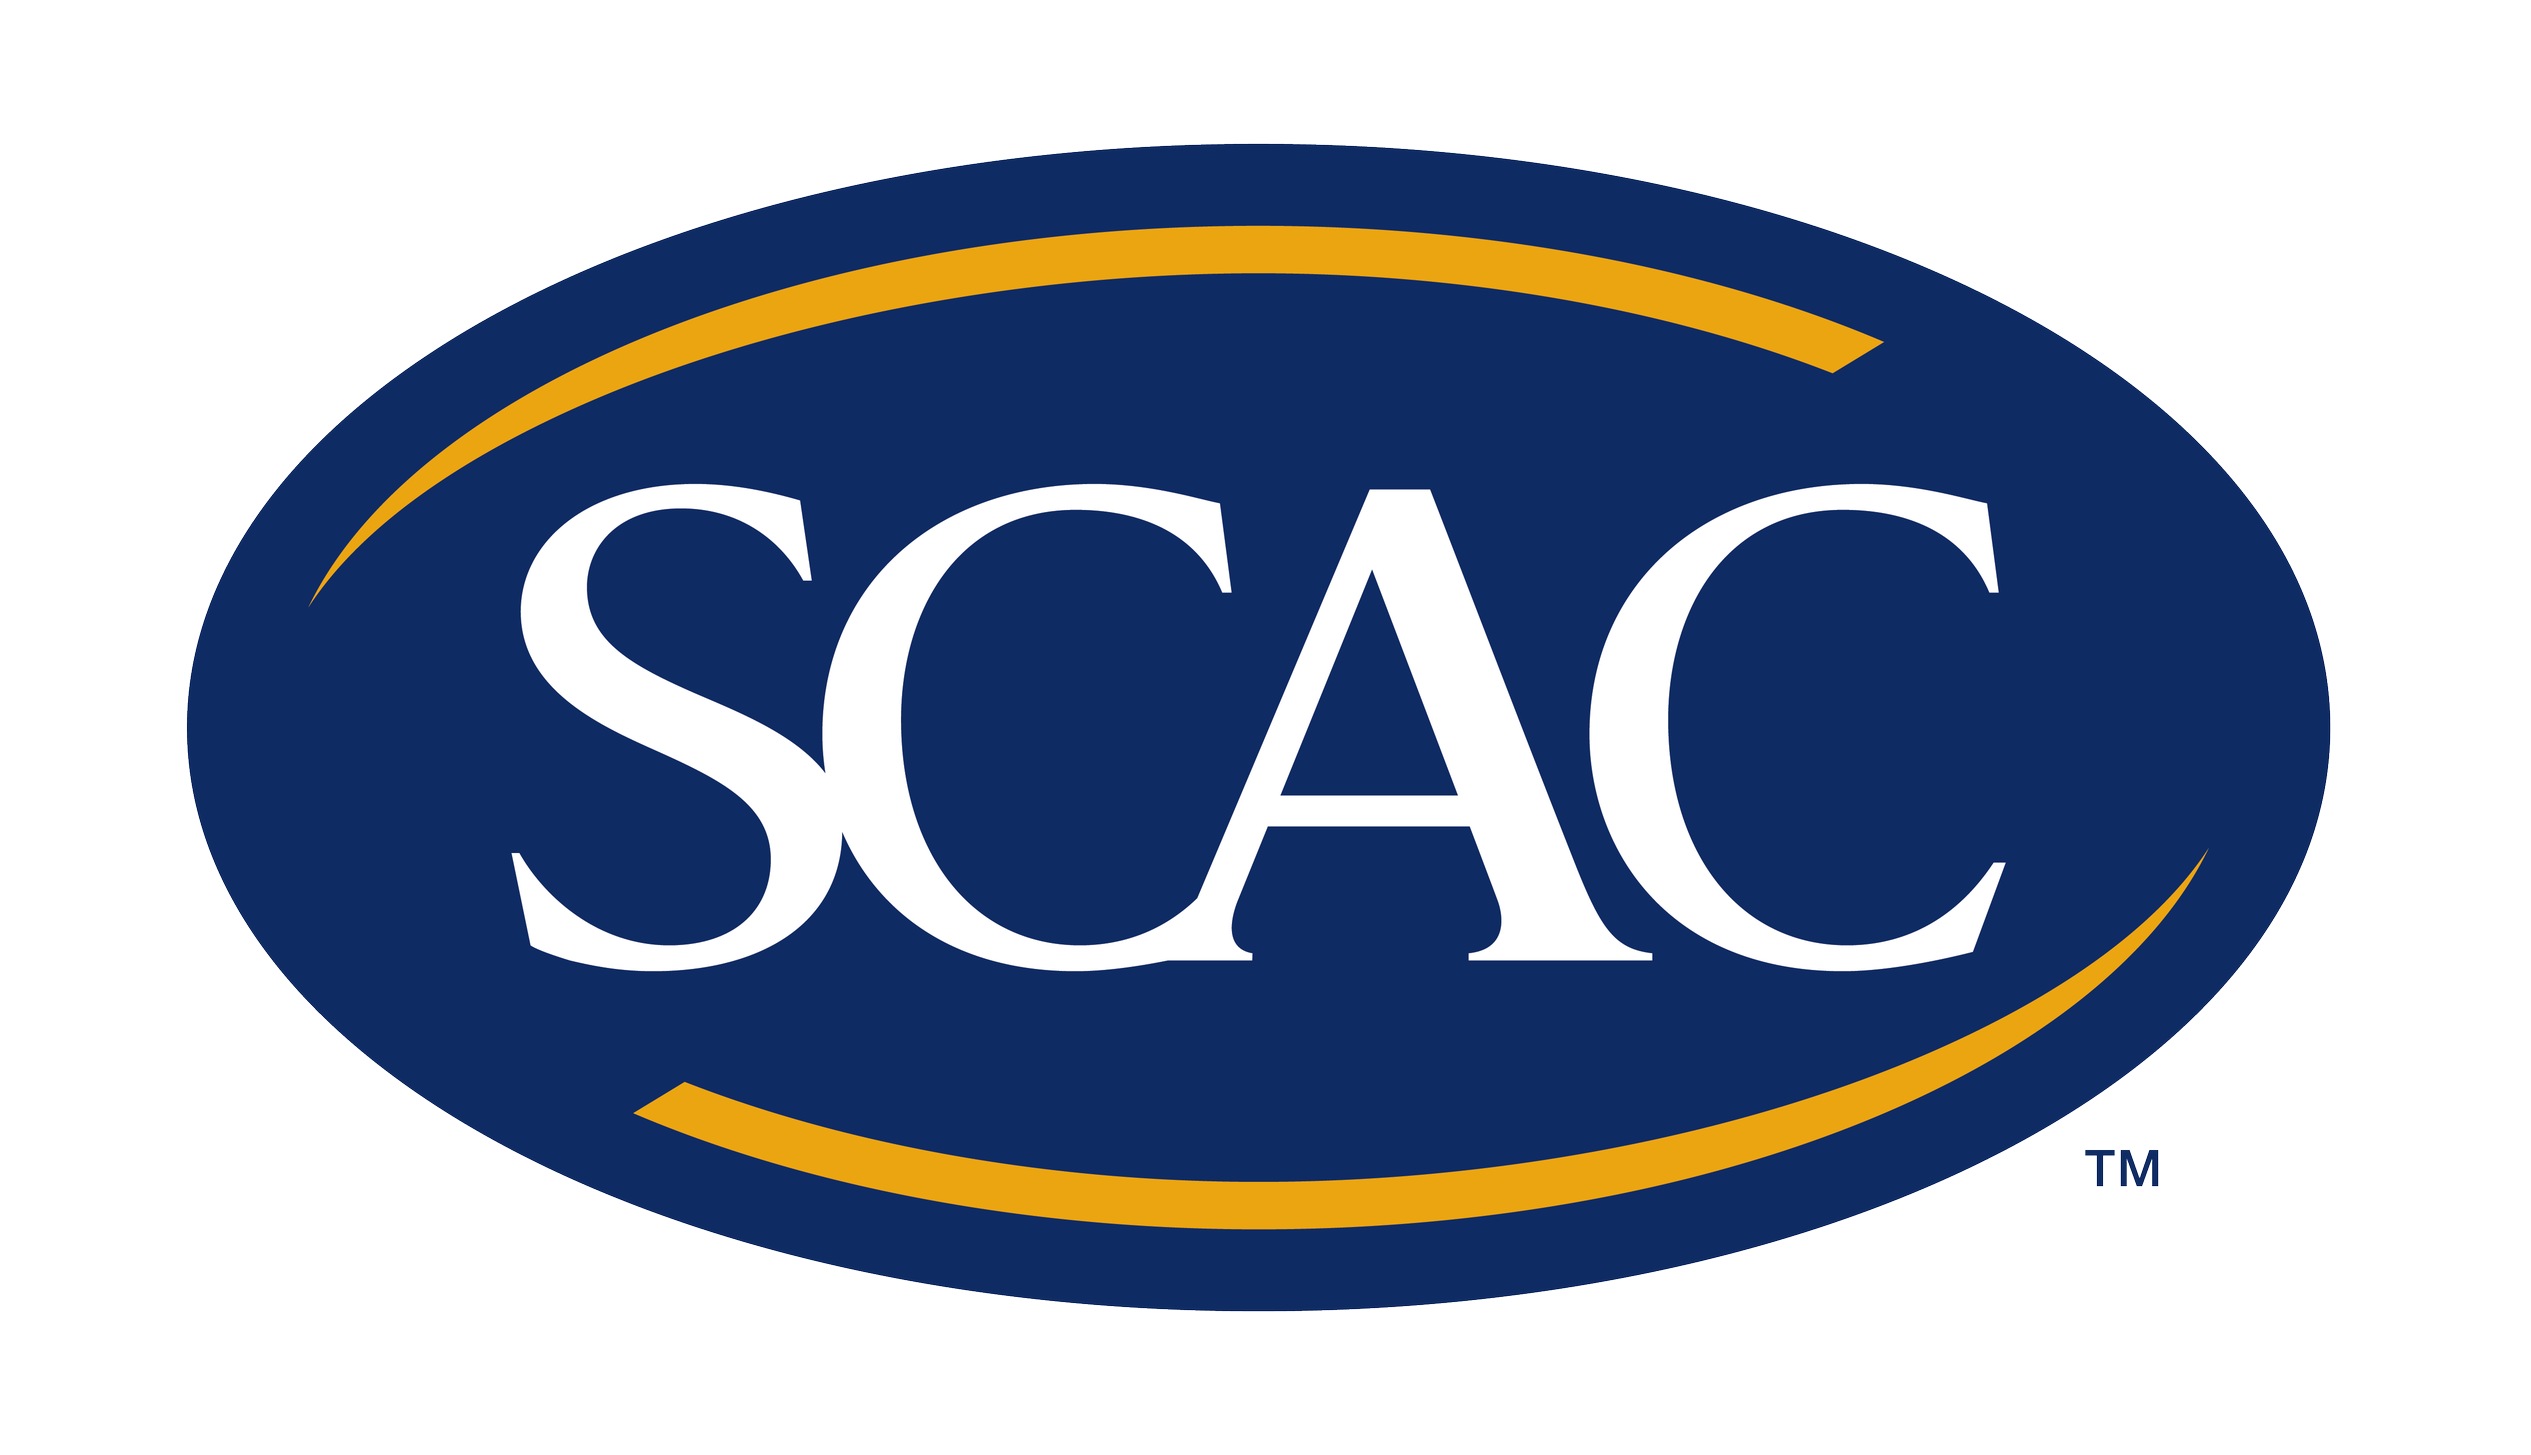 SCAC